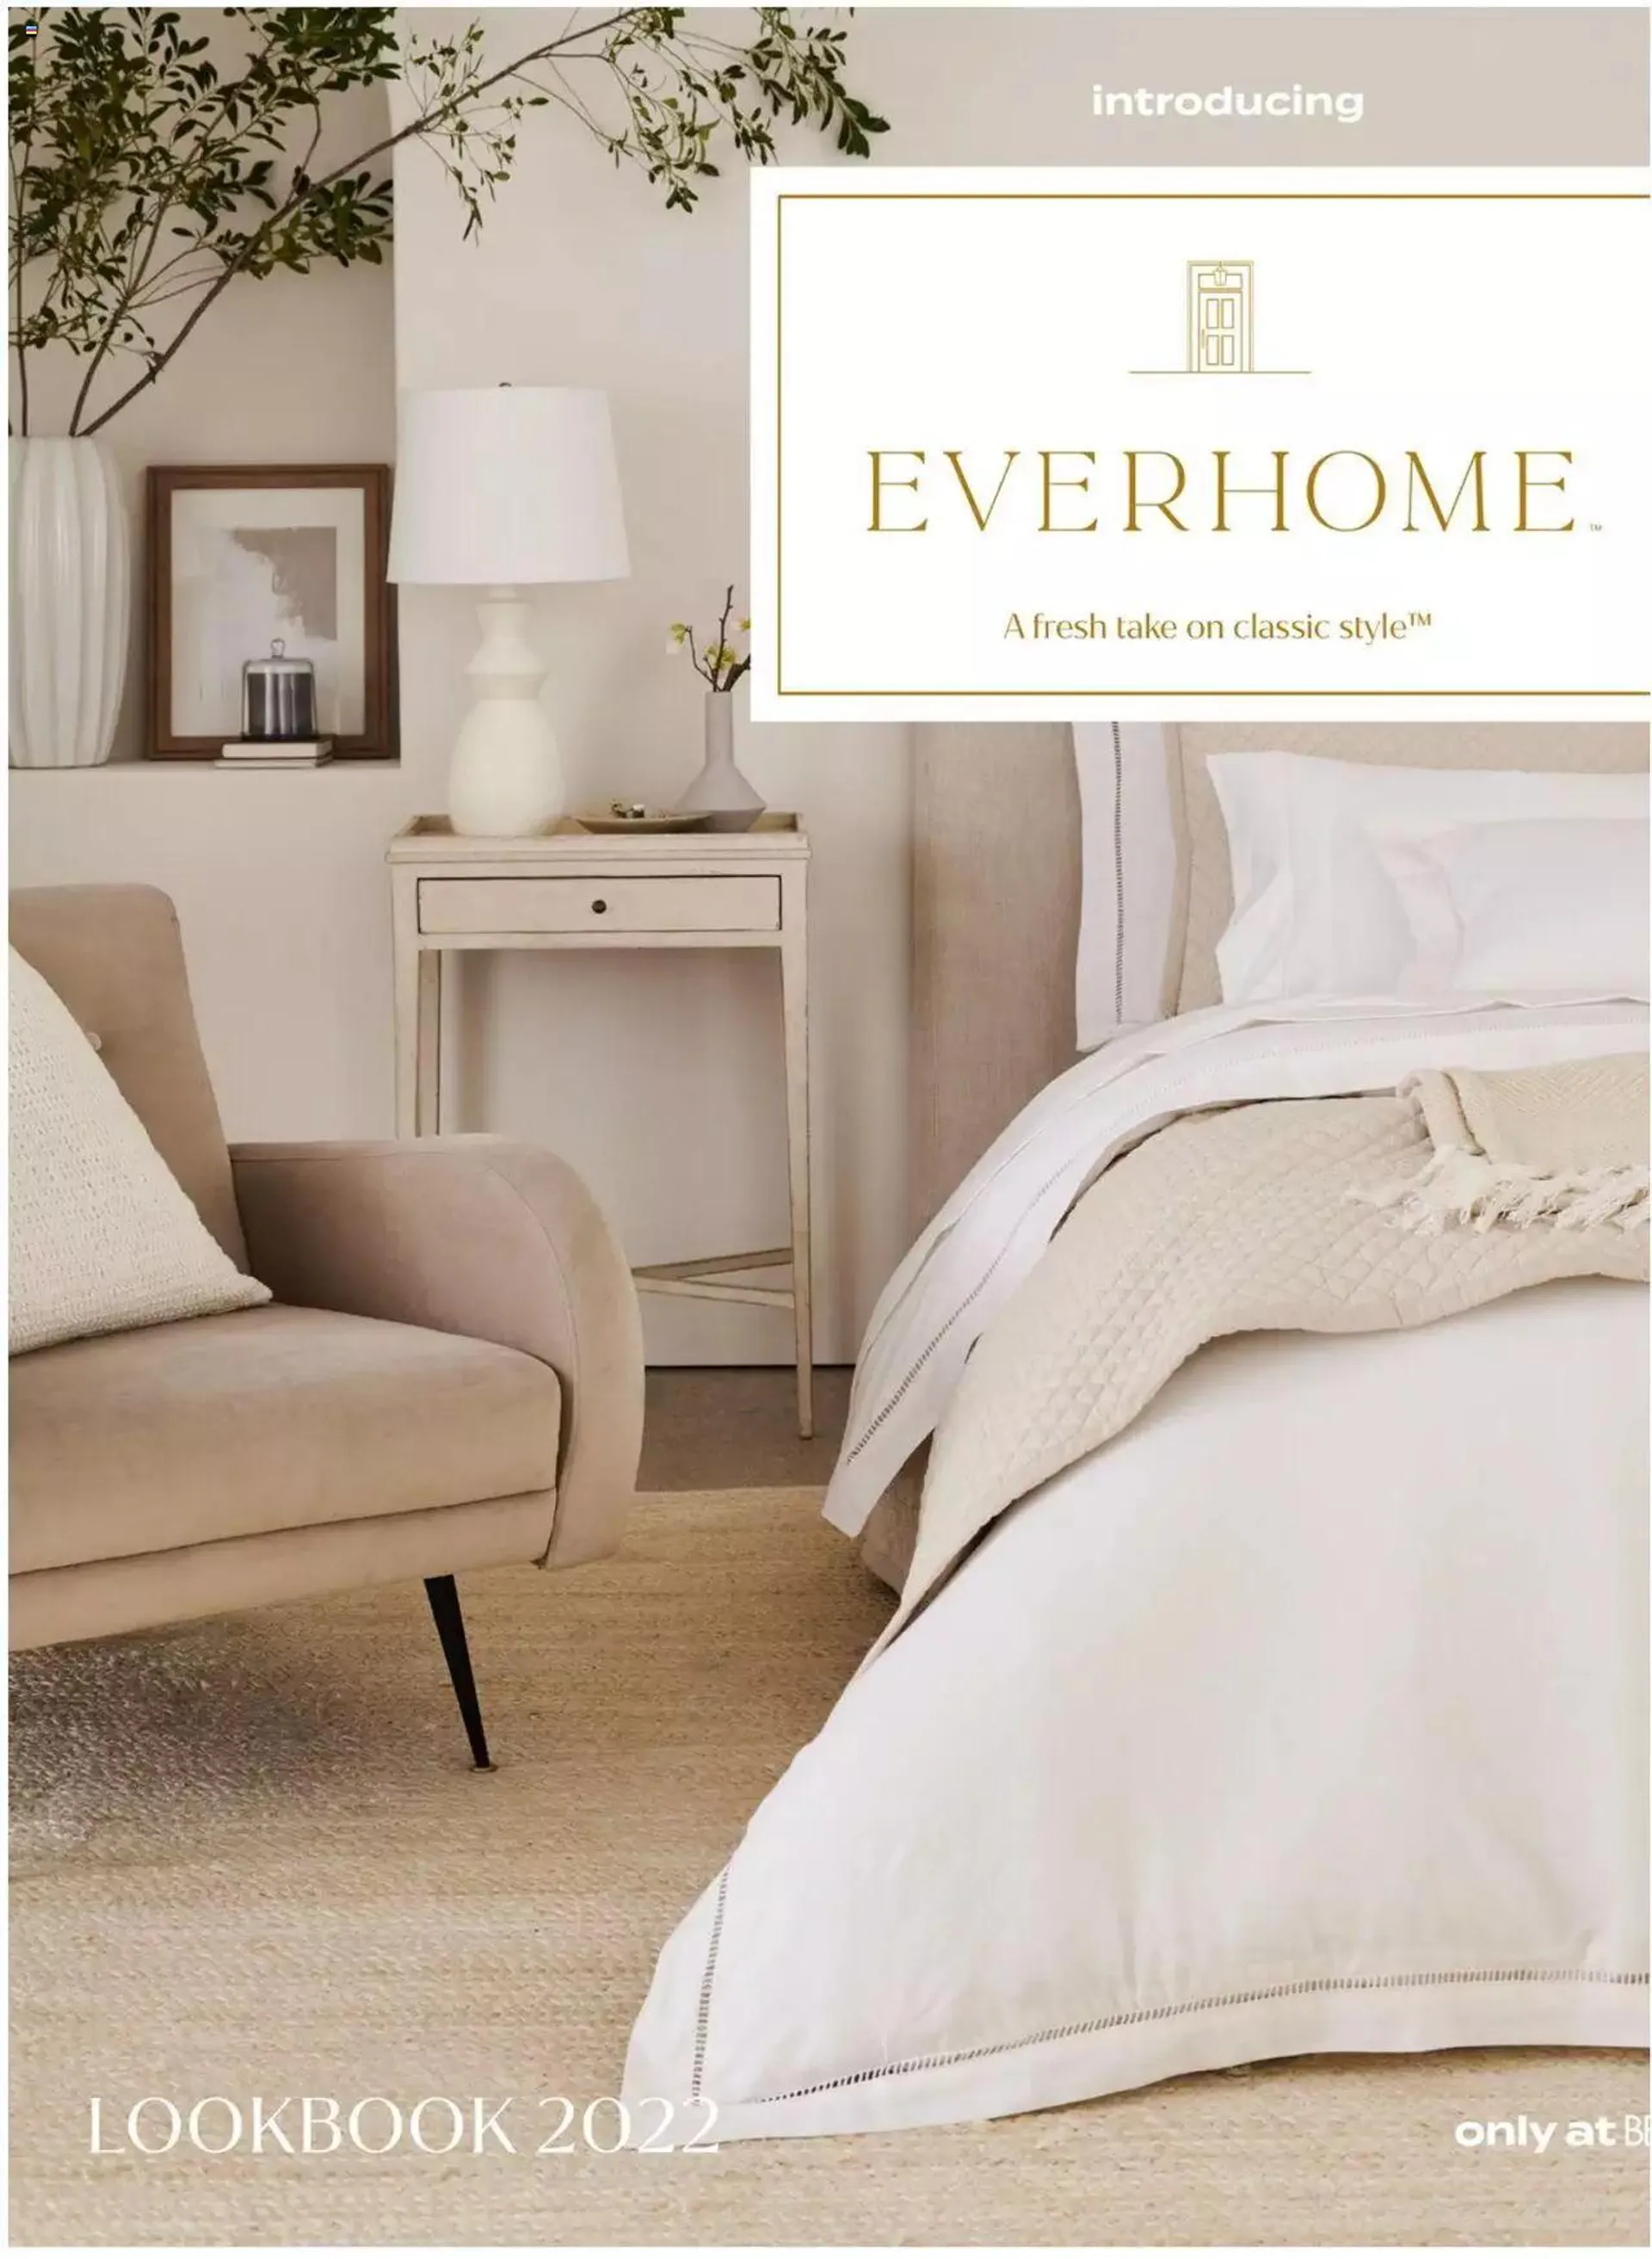 Bed Bath & Beyond Everhome Look book - 0